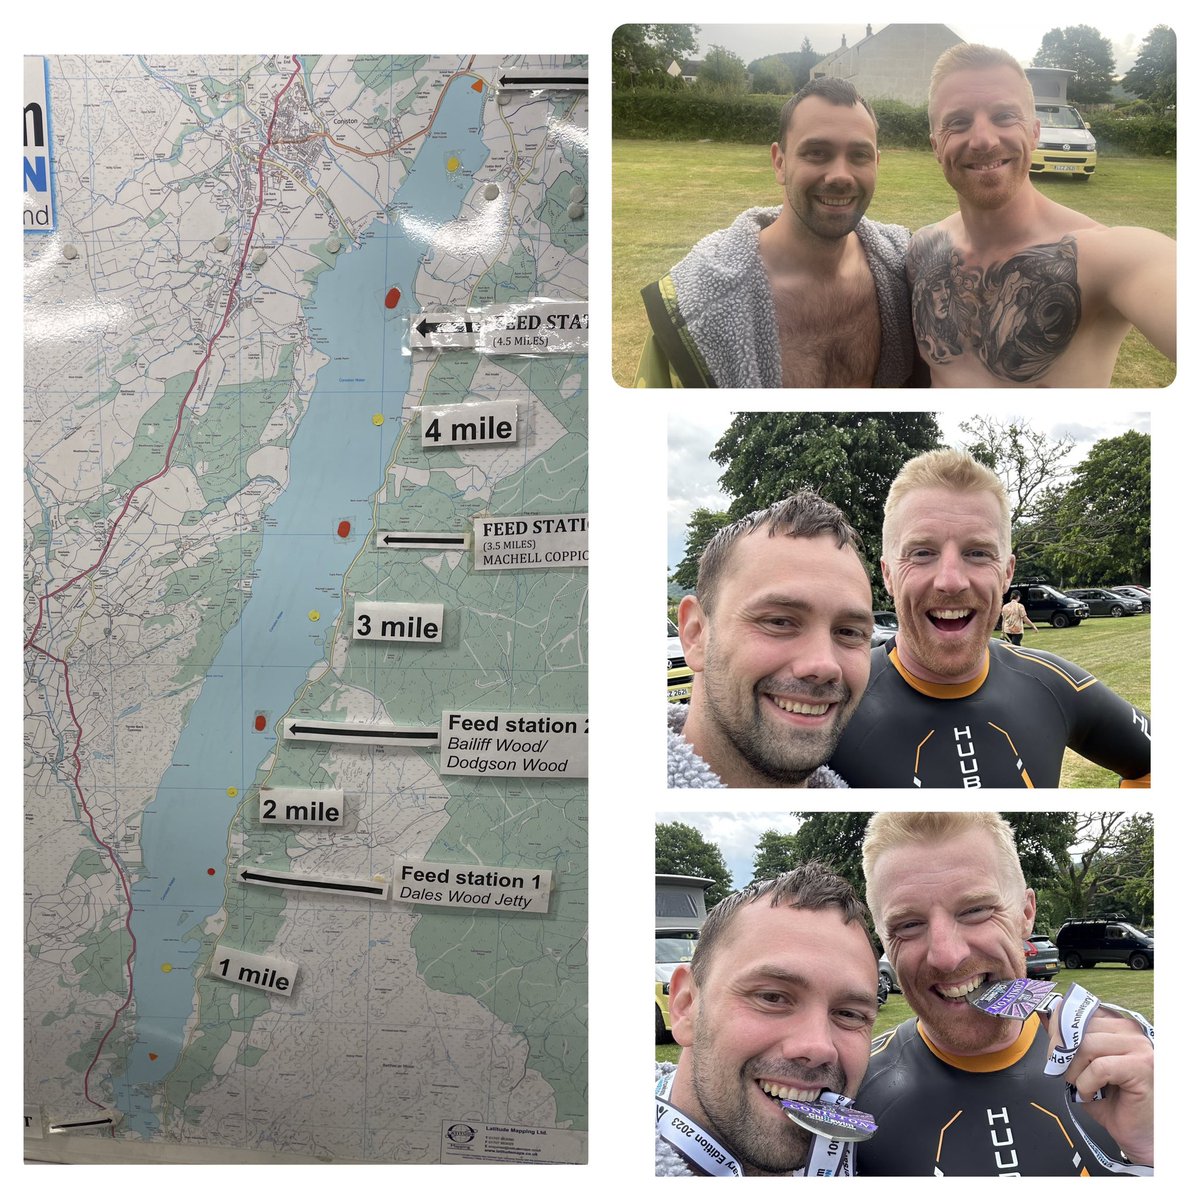 Coniston swim ✅ 
5.25 miles in just over 3 hours